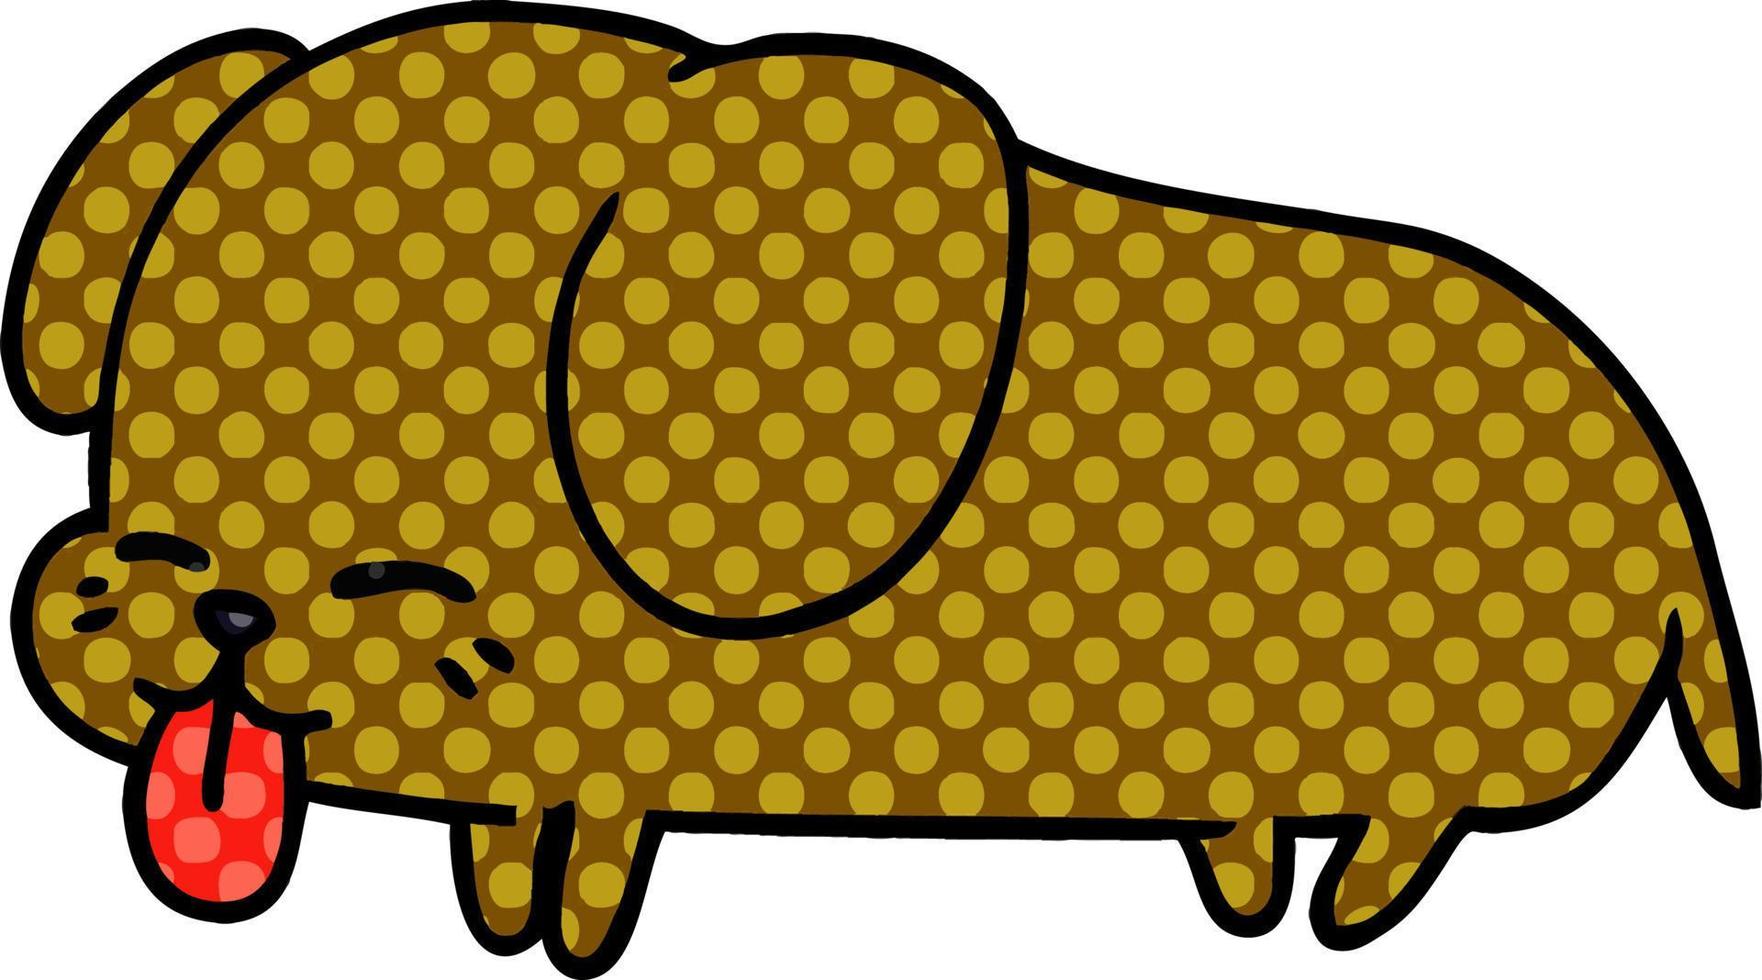 dessin animé de chien kawaii mignon vecteur